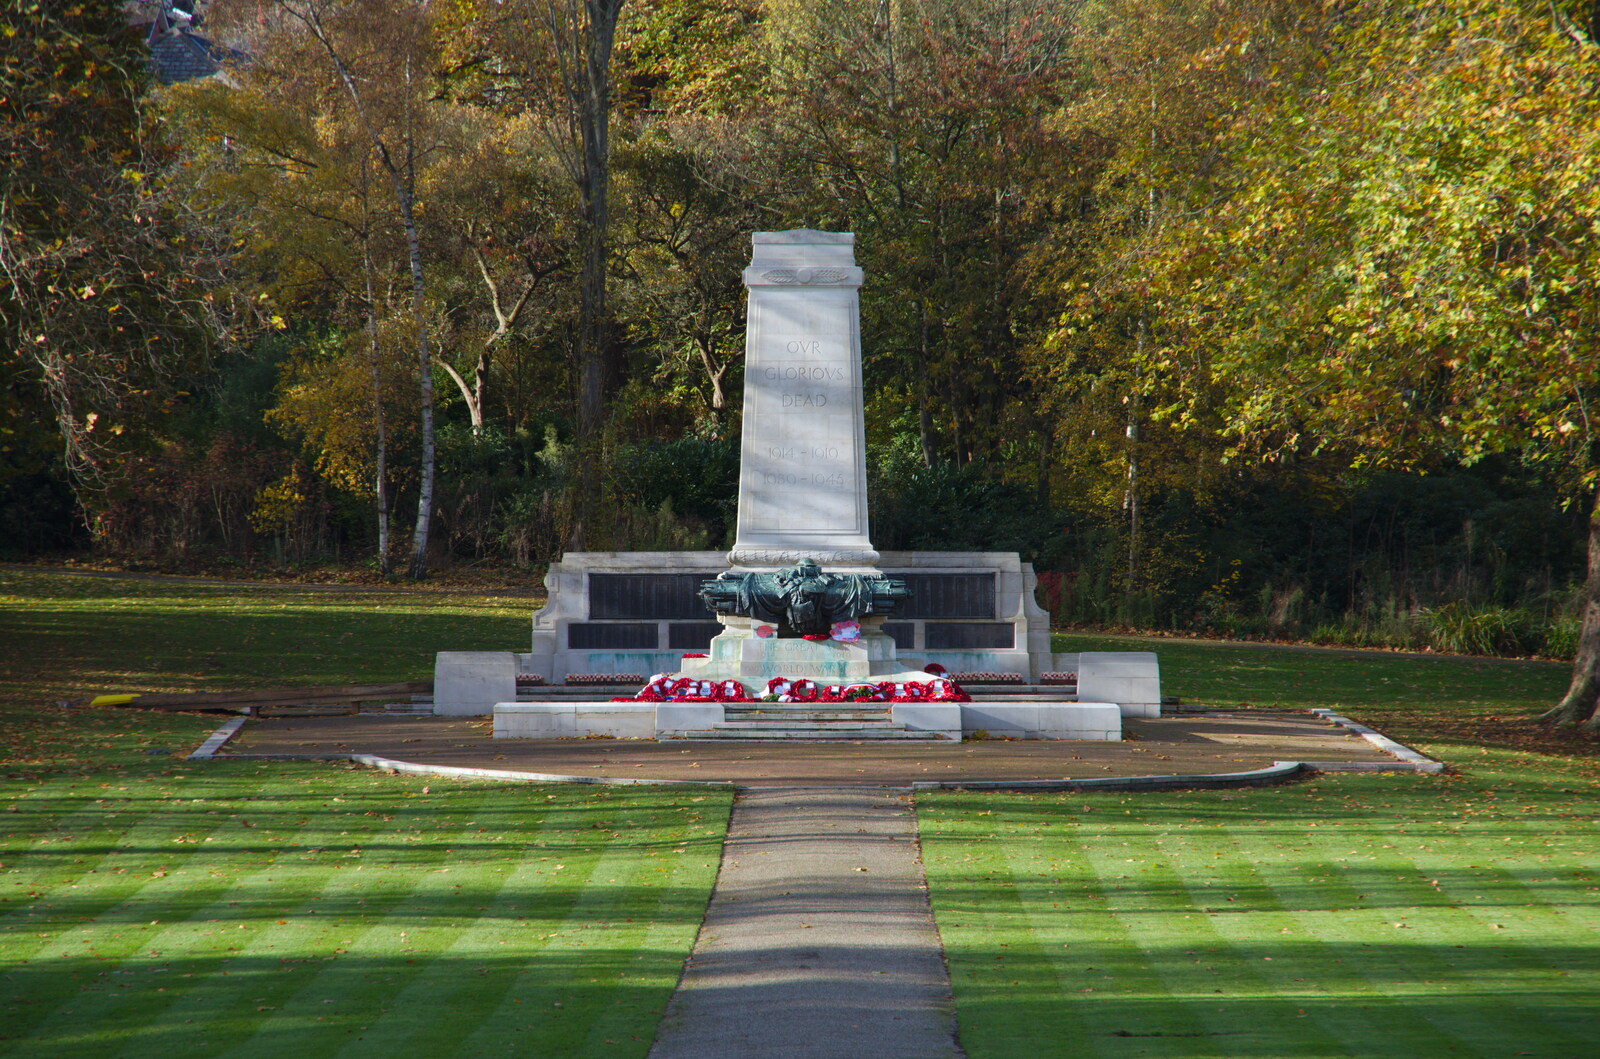 The war memorial from Exam Day Dereliction, Ipswich, Suffolk - 13th November 2019